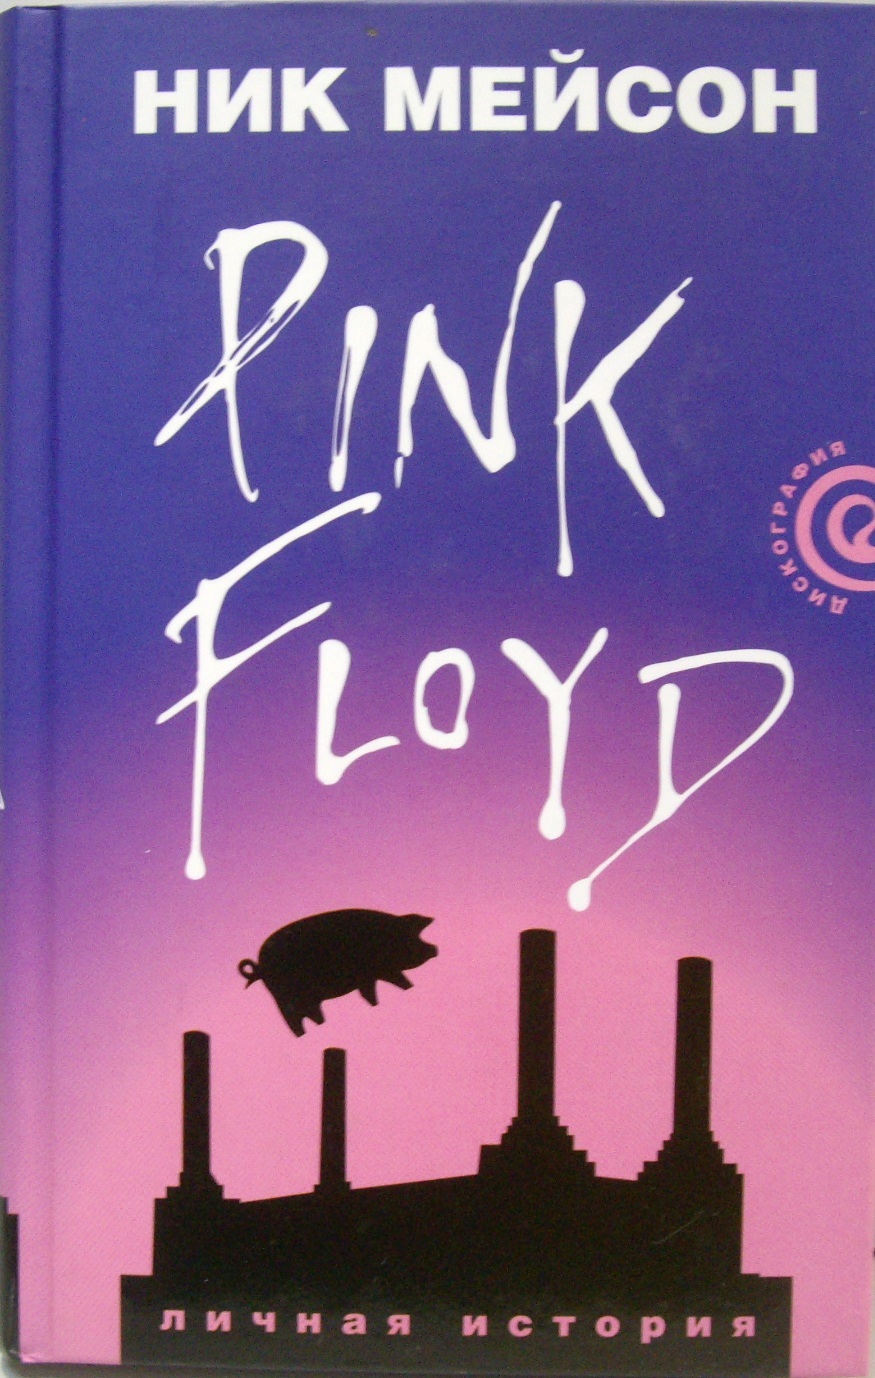 Ник Мейсон	Pink Floyd , 2007 г.	Цена	1 200 ₽ - НОВАЯ ЦЕНА 900 р.
